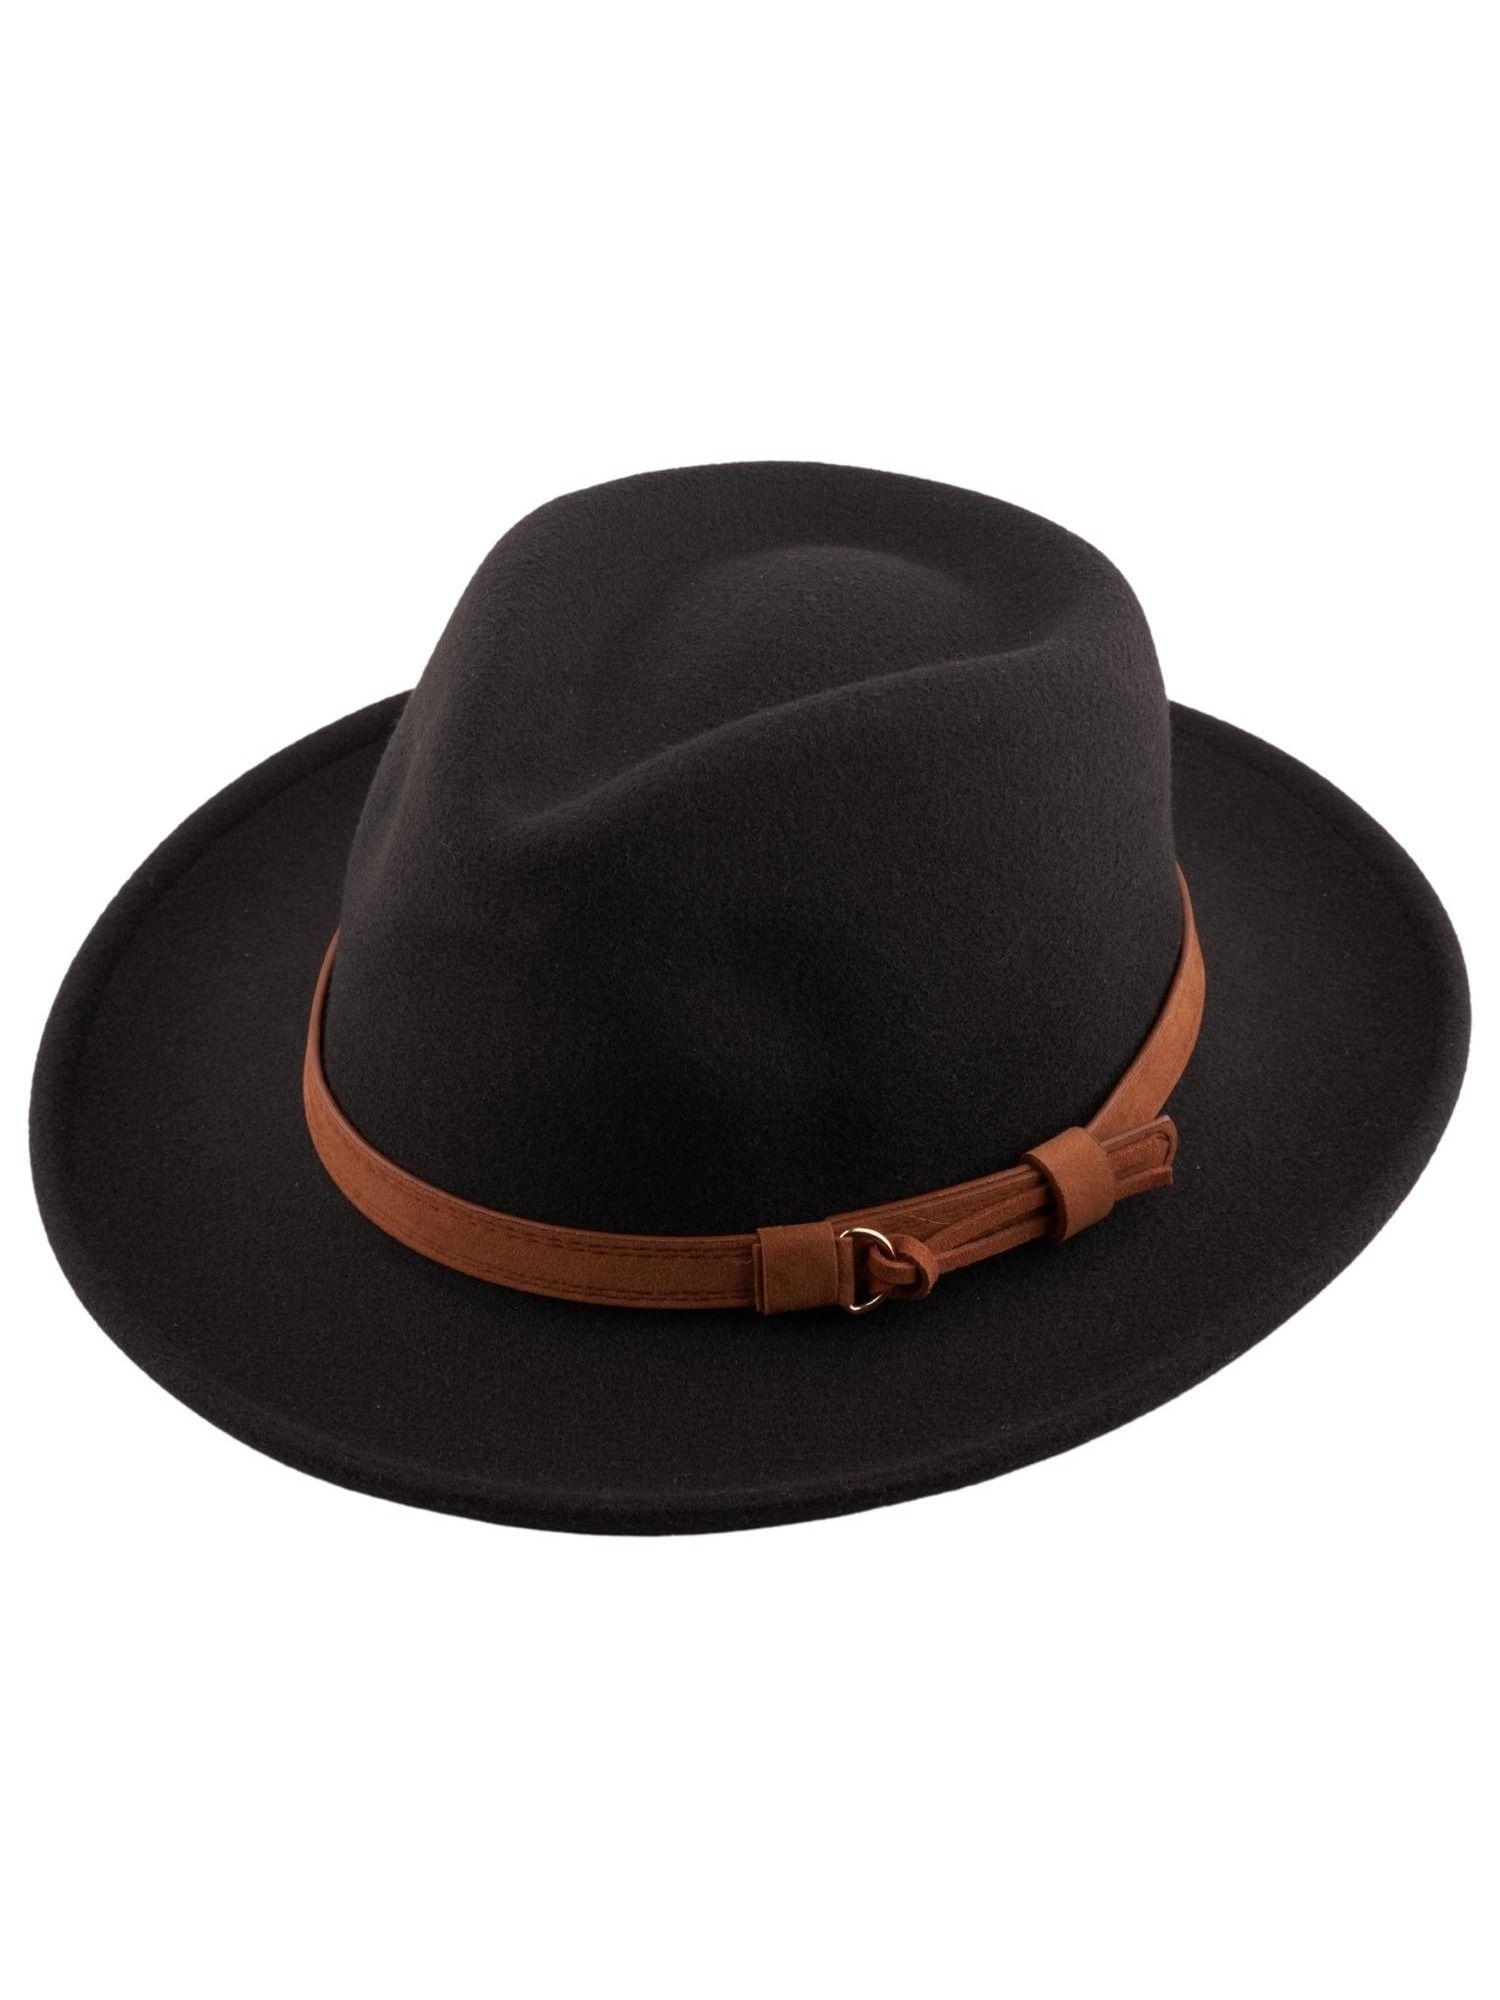 homburg-solid-black-fedora-hat